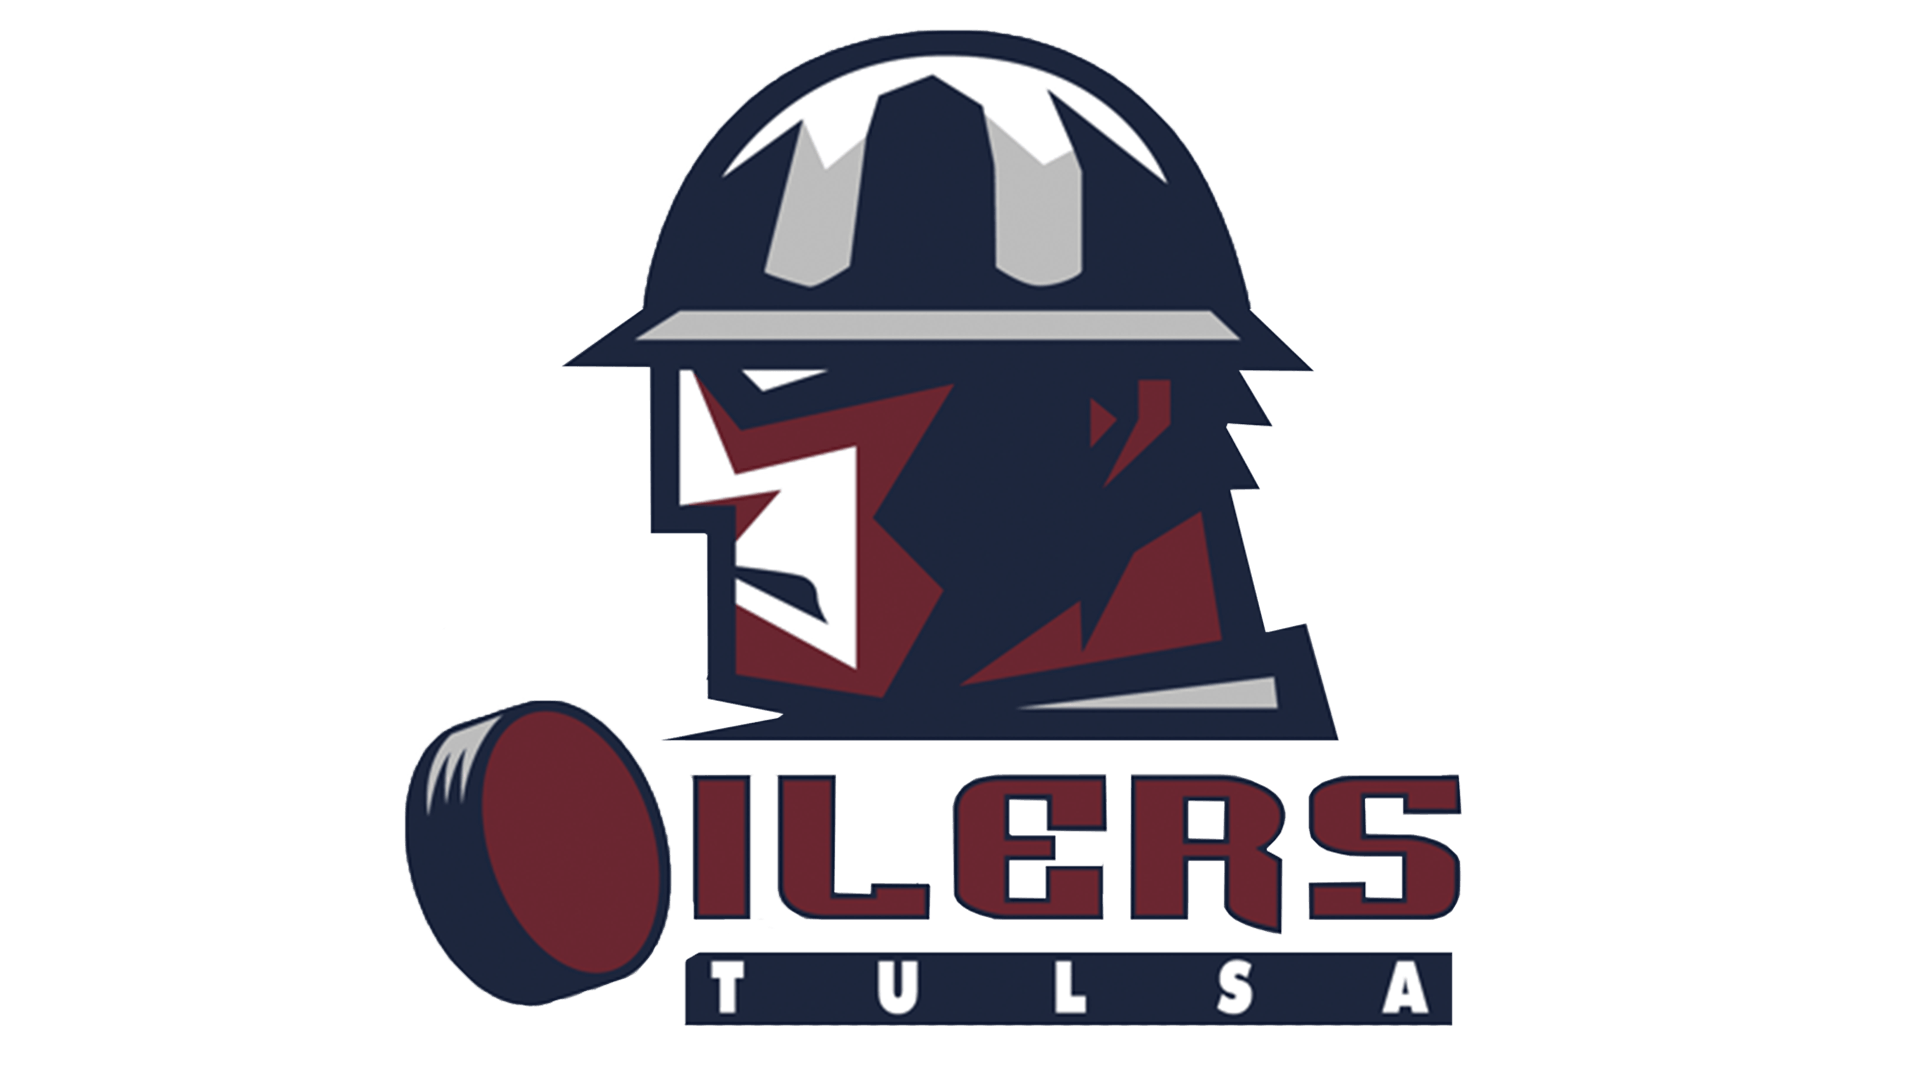 Tulsa Logo - Meaning Tulsa Oilers logo and symbol | history and evolution